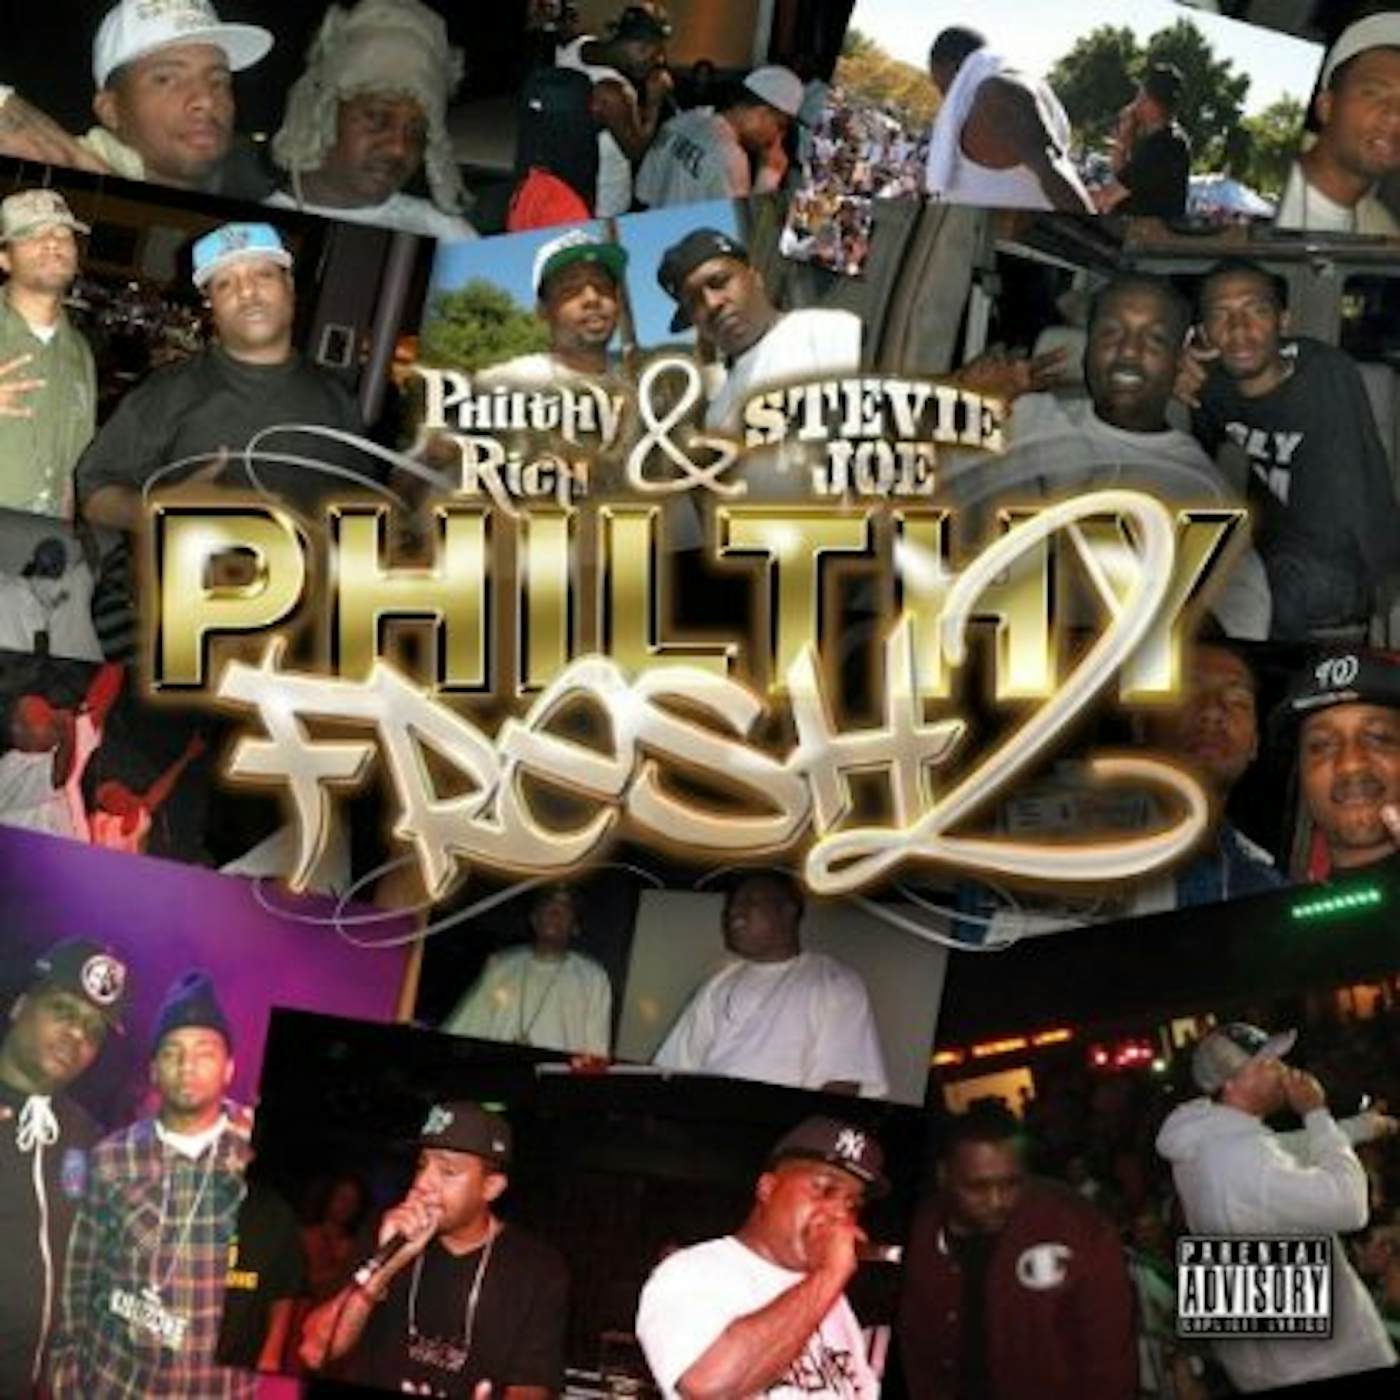 Philthy Rich PHILTHYFRESH 2 CD